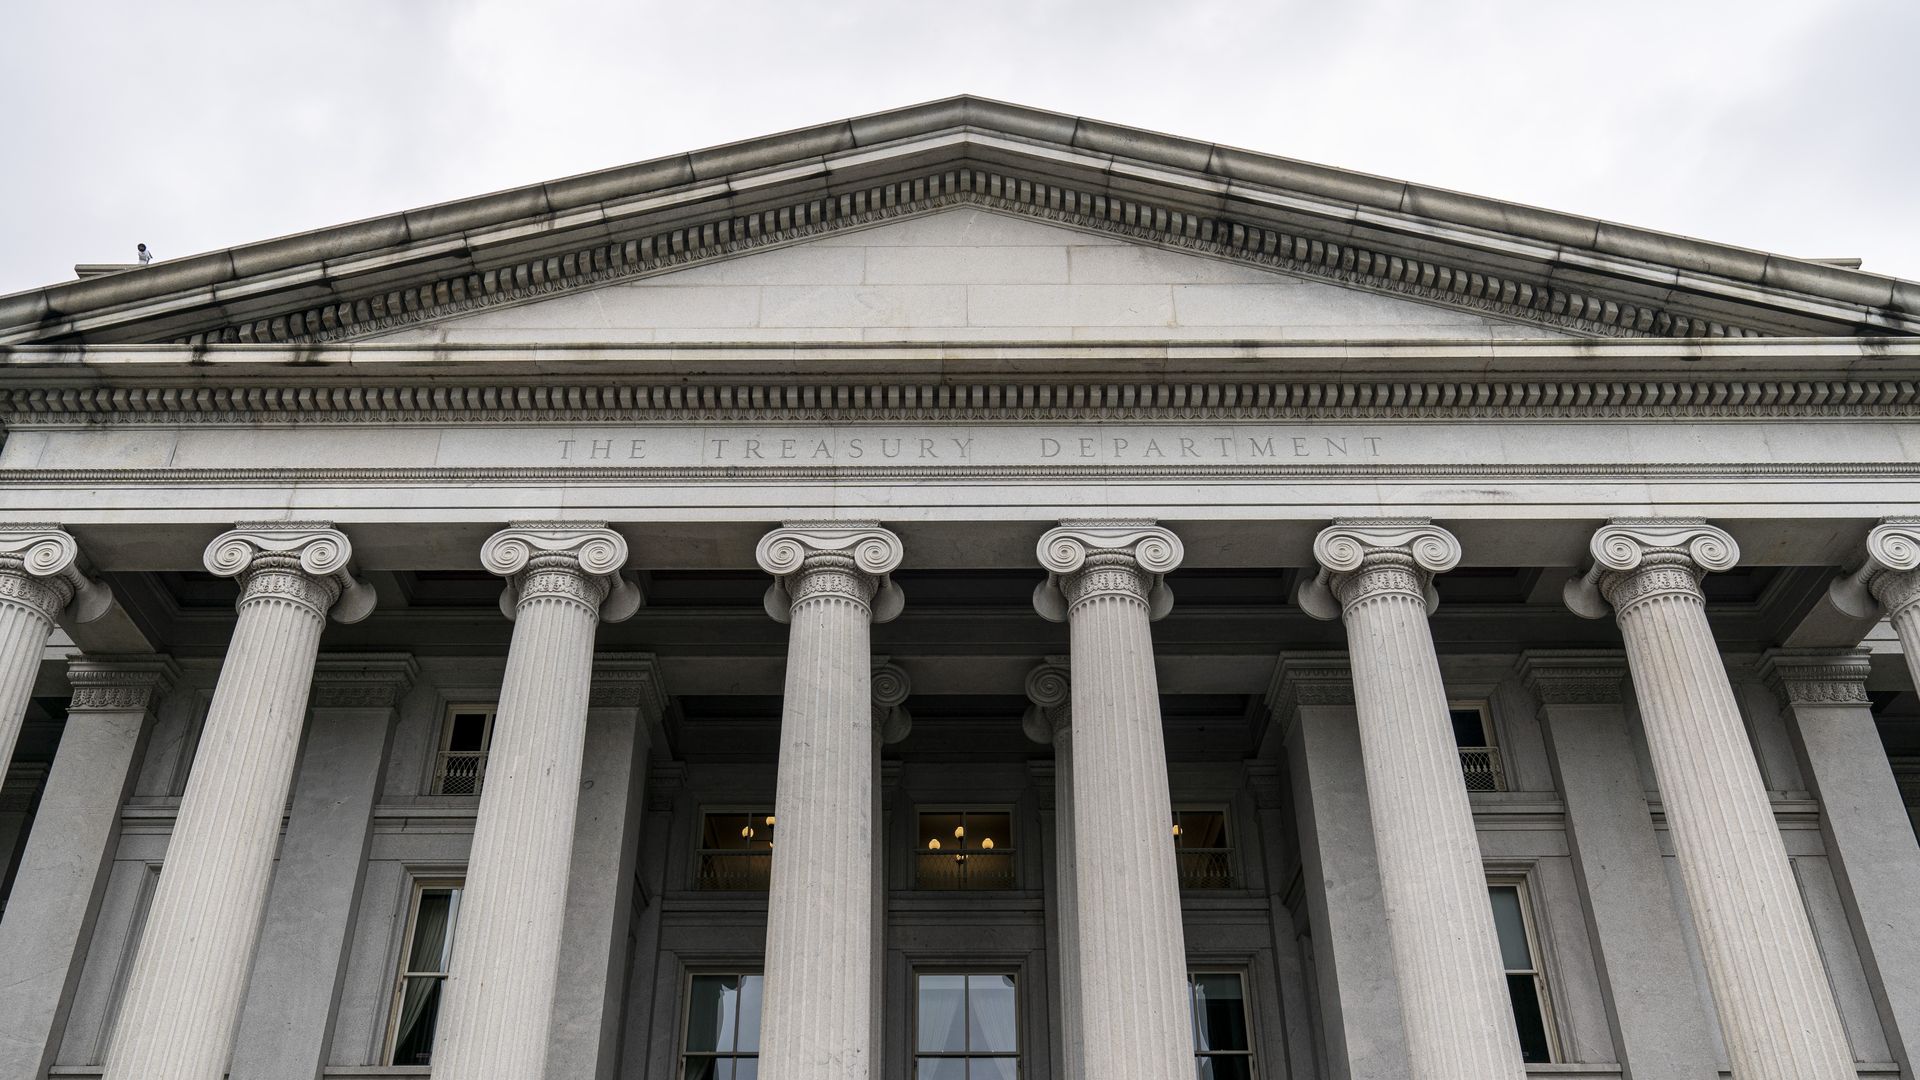 The U.S. Treasury building in Washington, D.C. on July 2.